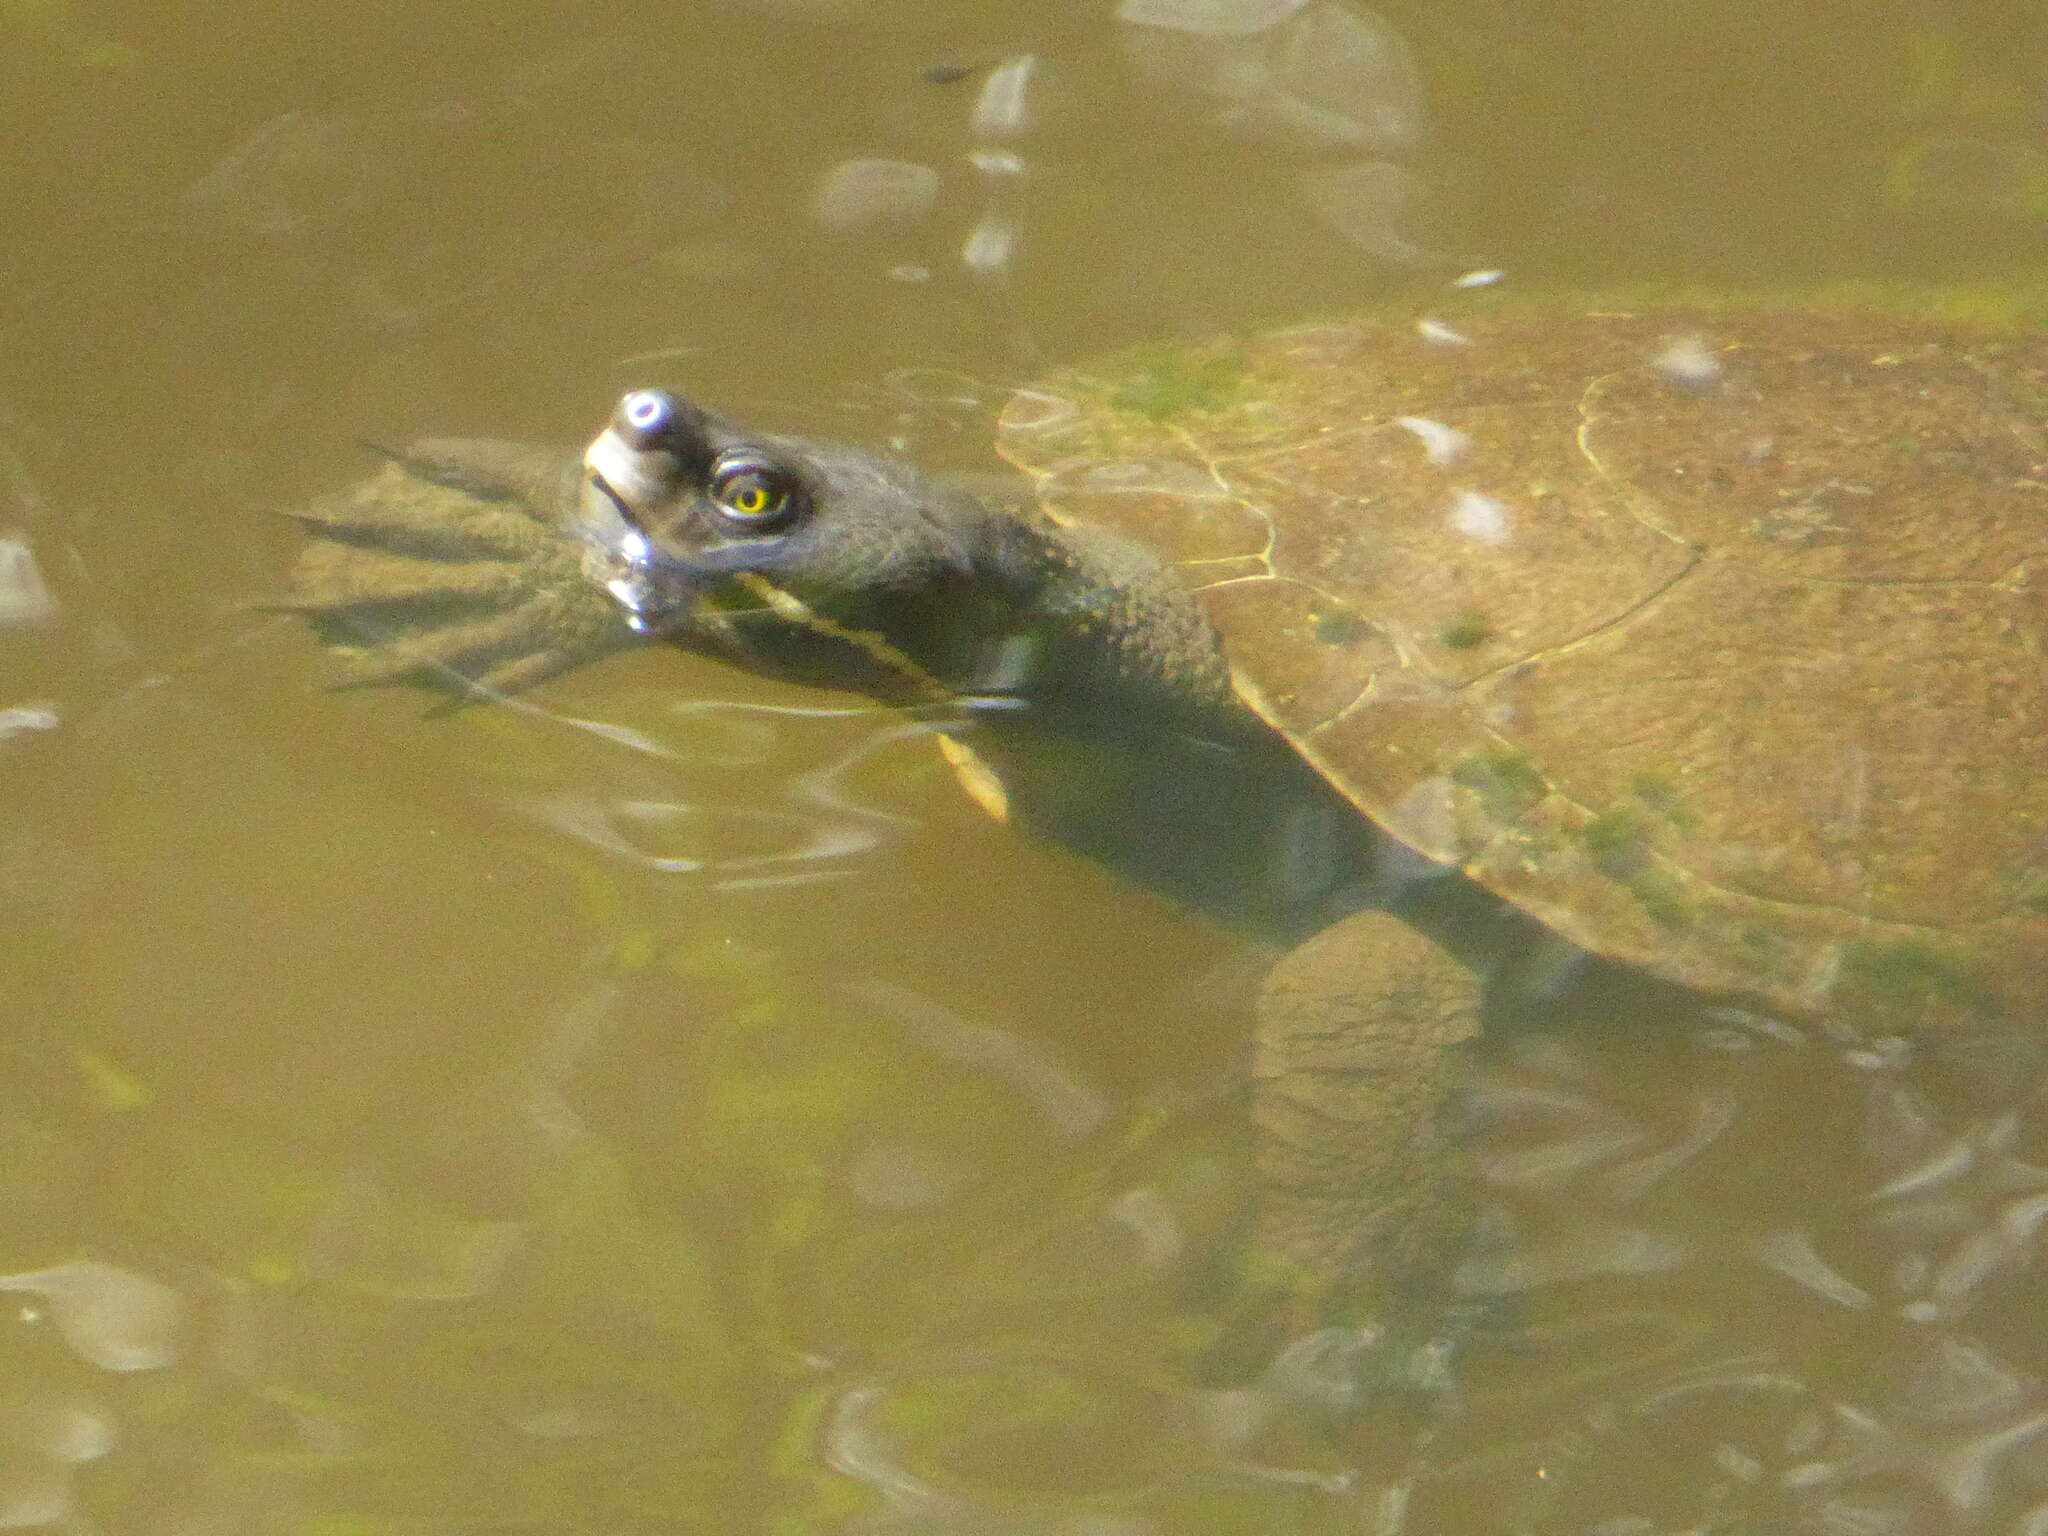 Image of Australian Big-headed Side-necked Turtle